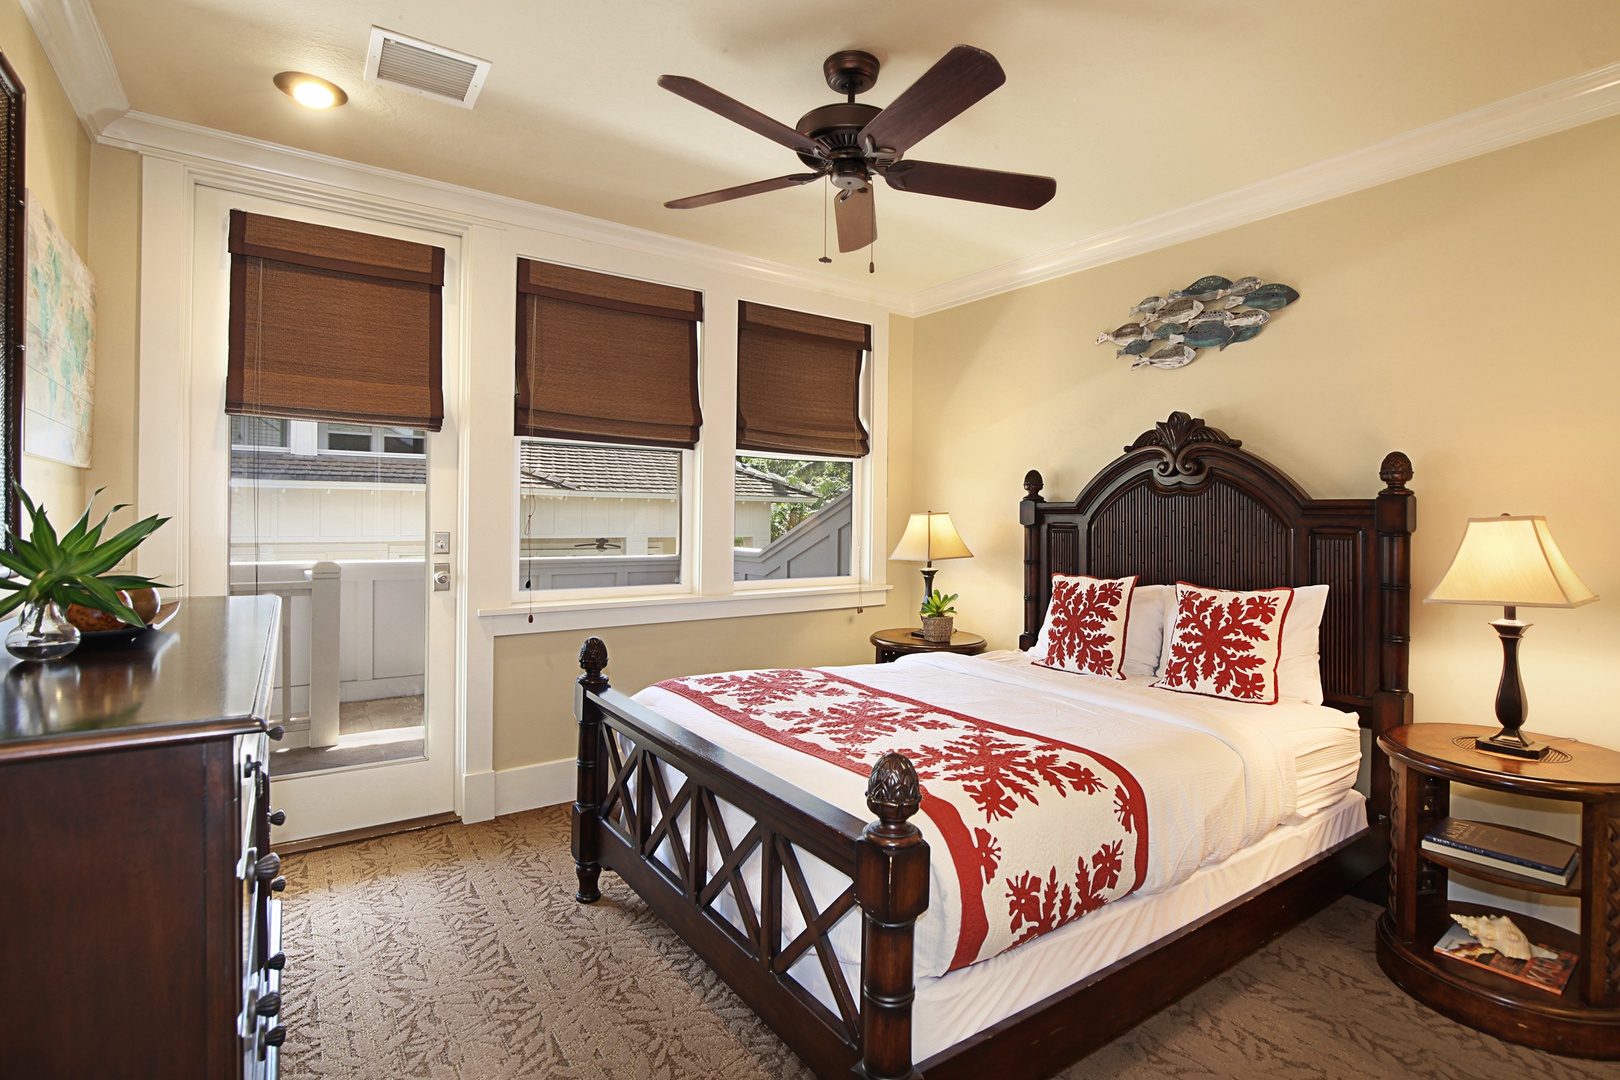 Koloa Vacation Rentals, Villas at Poipu Kai B300 - Guest bedroom 2 with queen